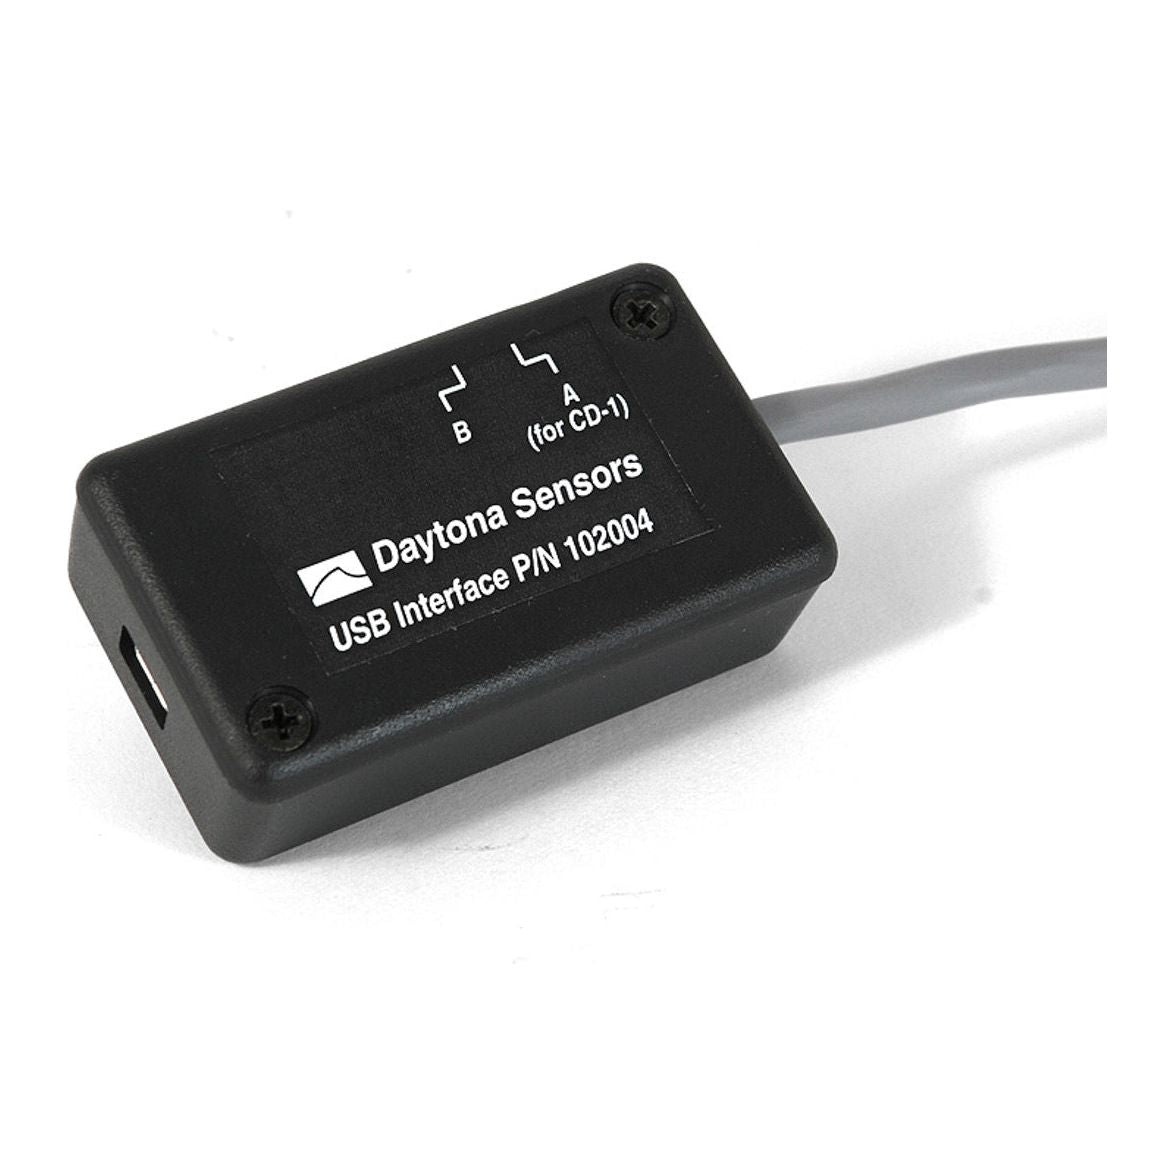 DAYTONA SENSORS USB Interface w/6ft Cable & CDROM Software - 102004